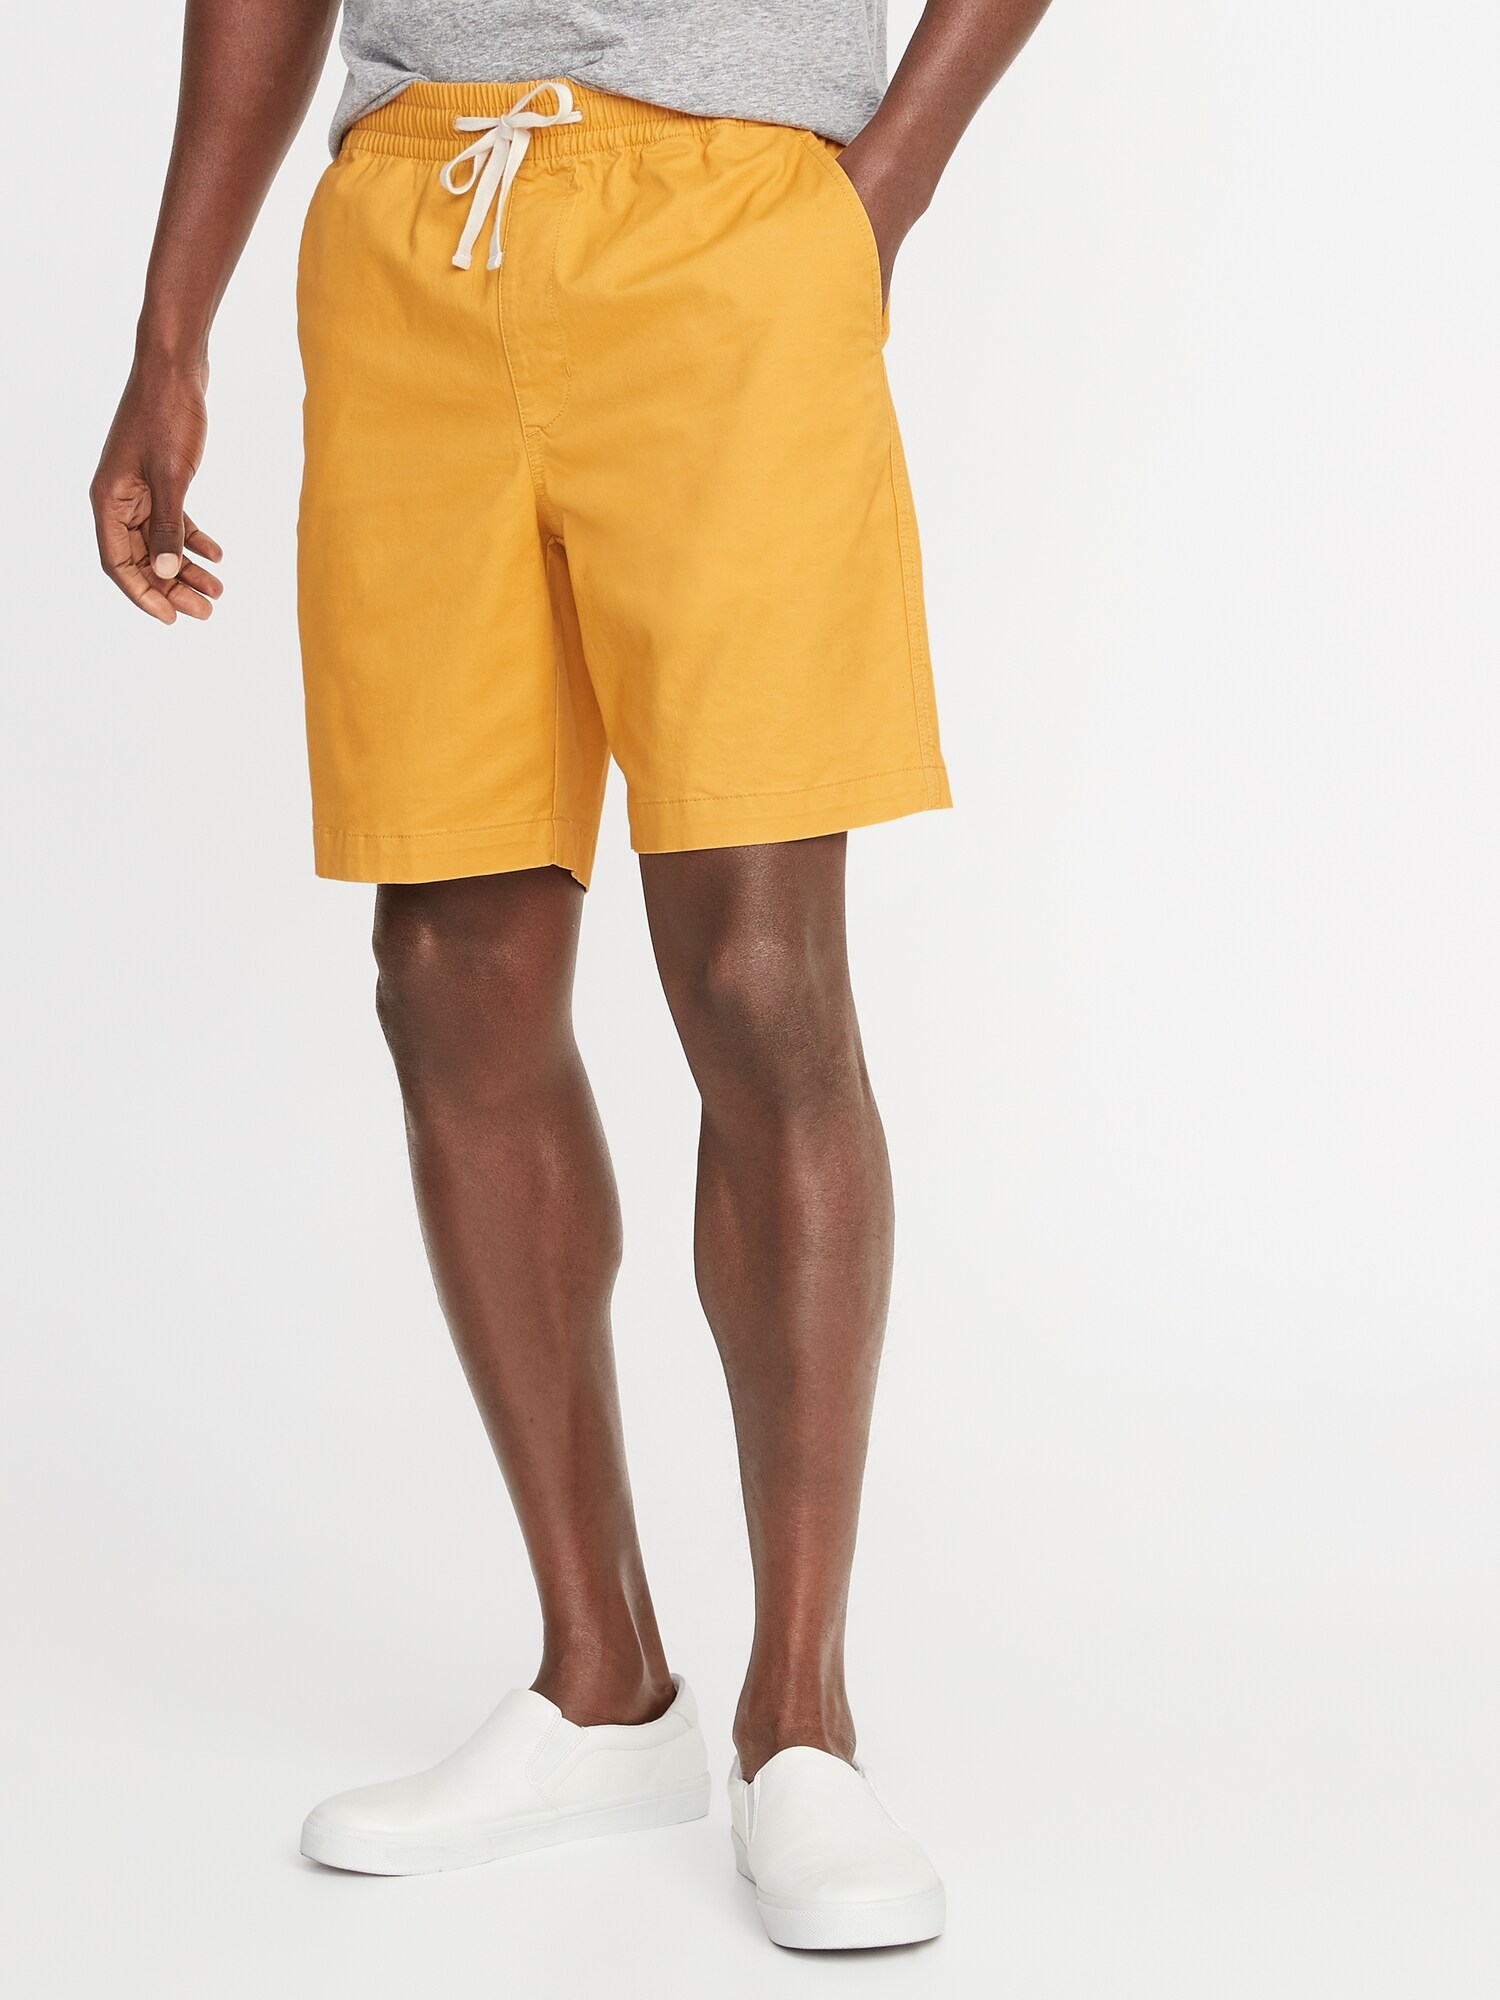 Twill Drawstring Jogger Shorts for Men - 9-inch inseam | Old Navy